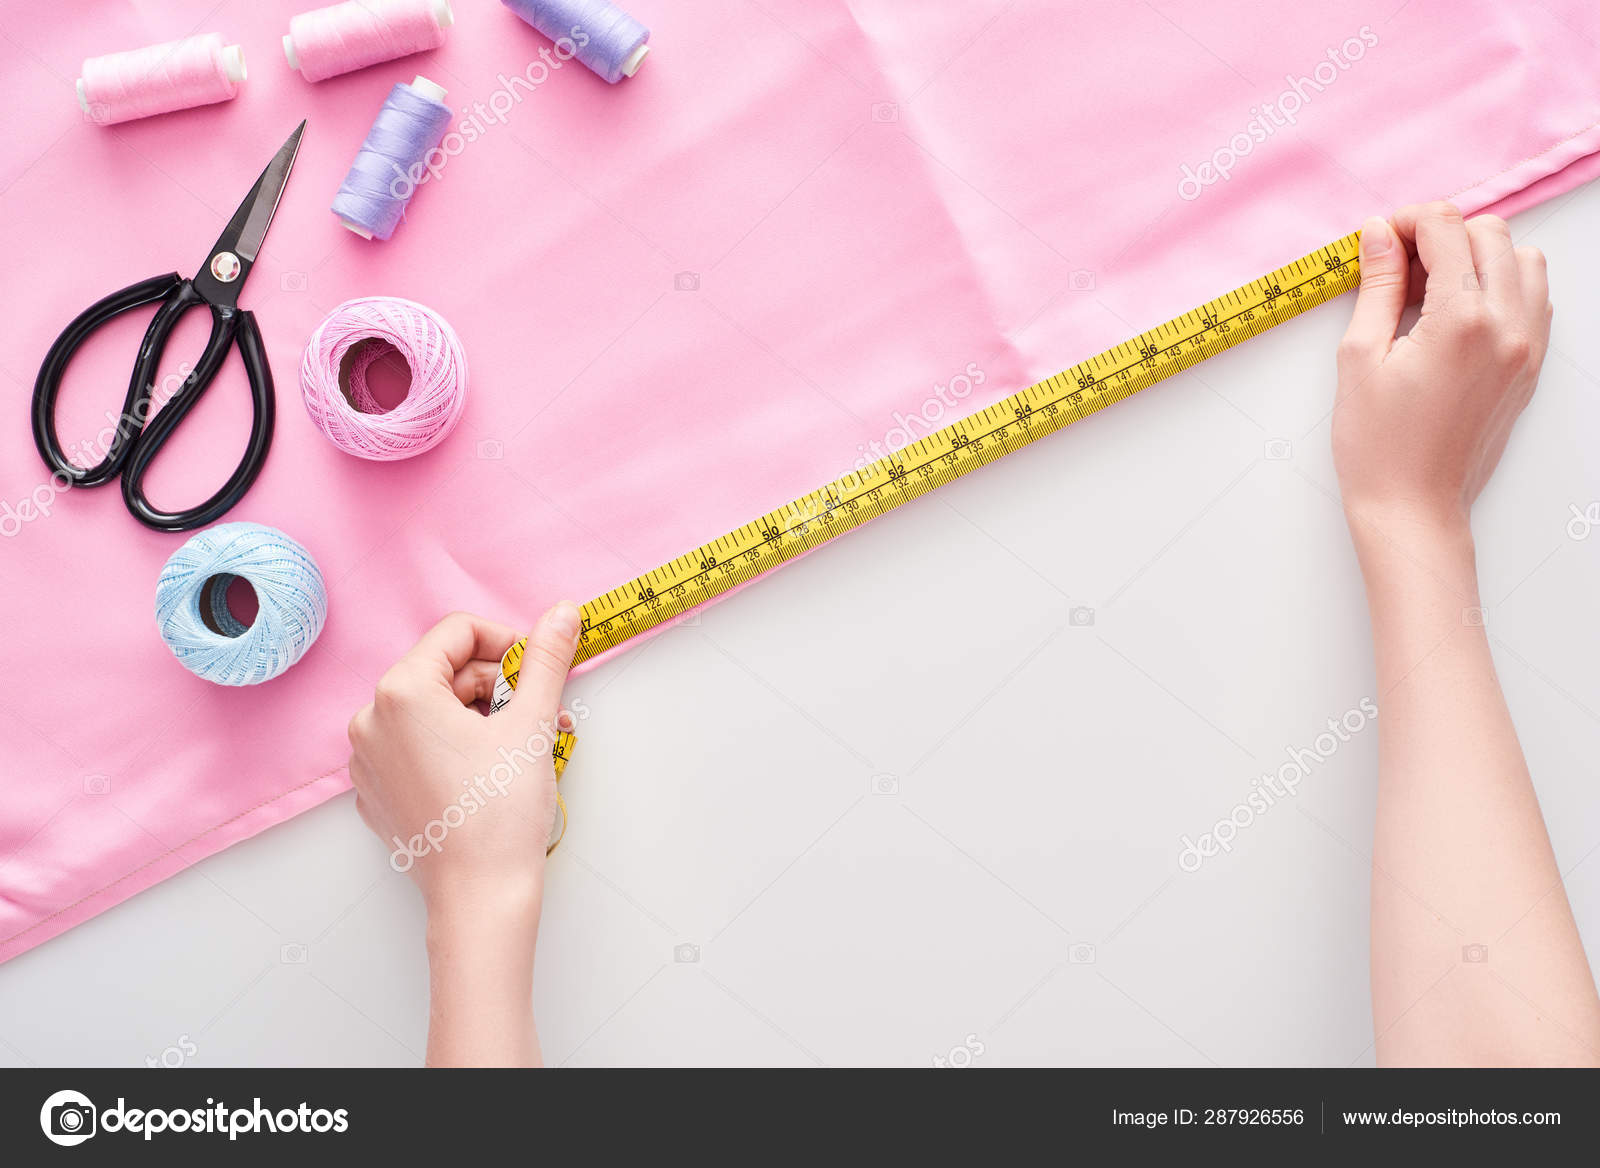 https://st4.depositphotos.com/13324256/28792/i/1600/depositphotos_287926556-stock-photo-cropped-view-seamstress-measuring-fabric.jpg